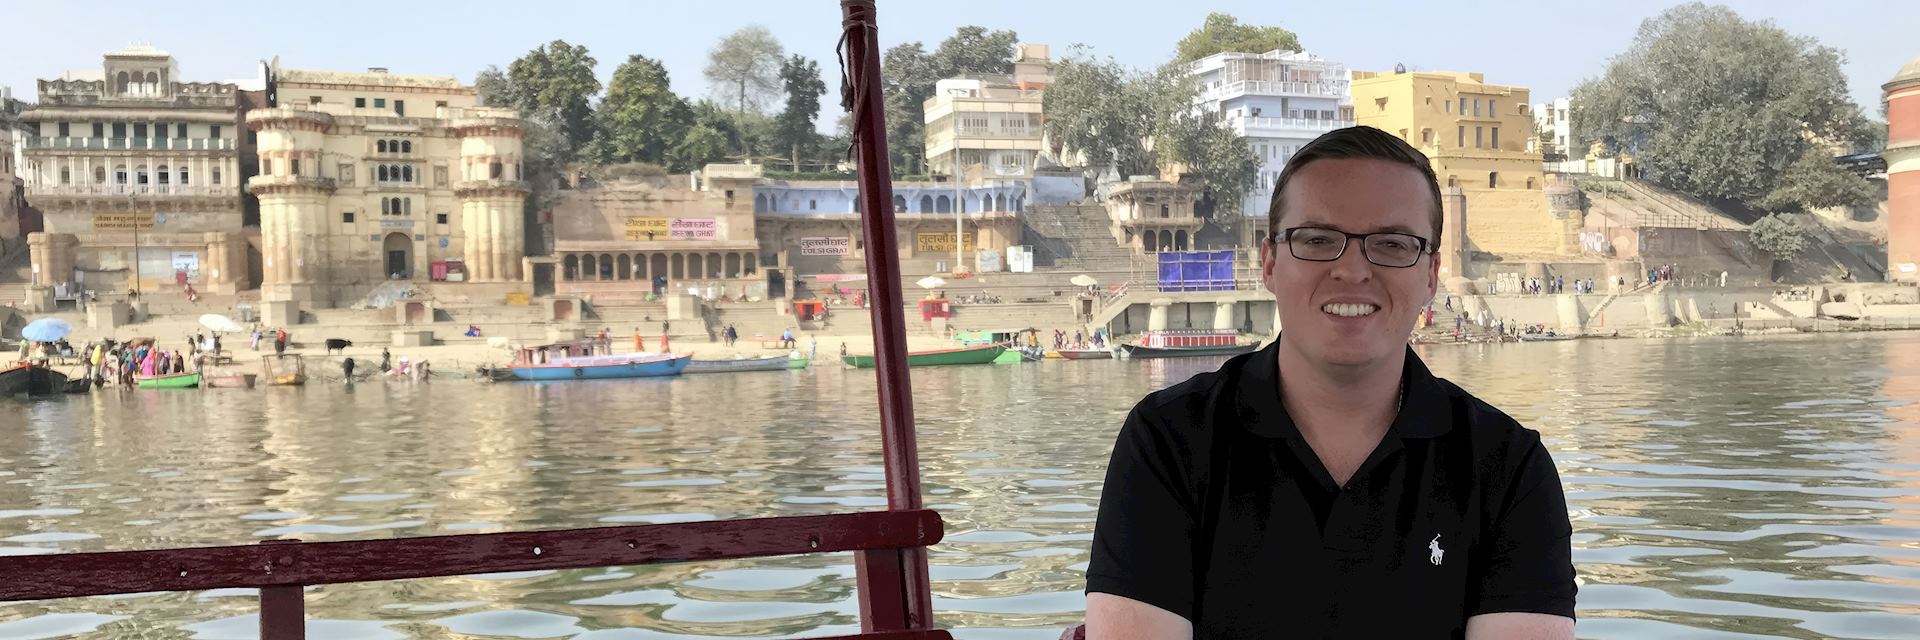 Jason on a boat trip to the Ghats, Varanasi